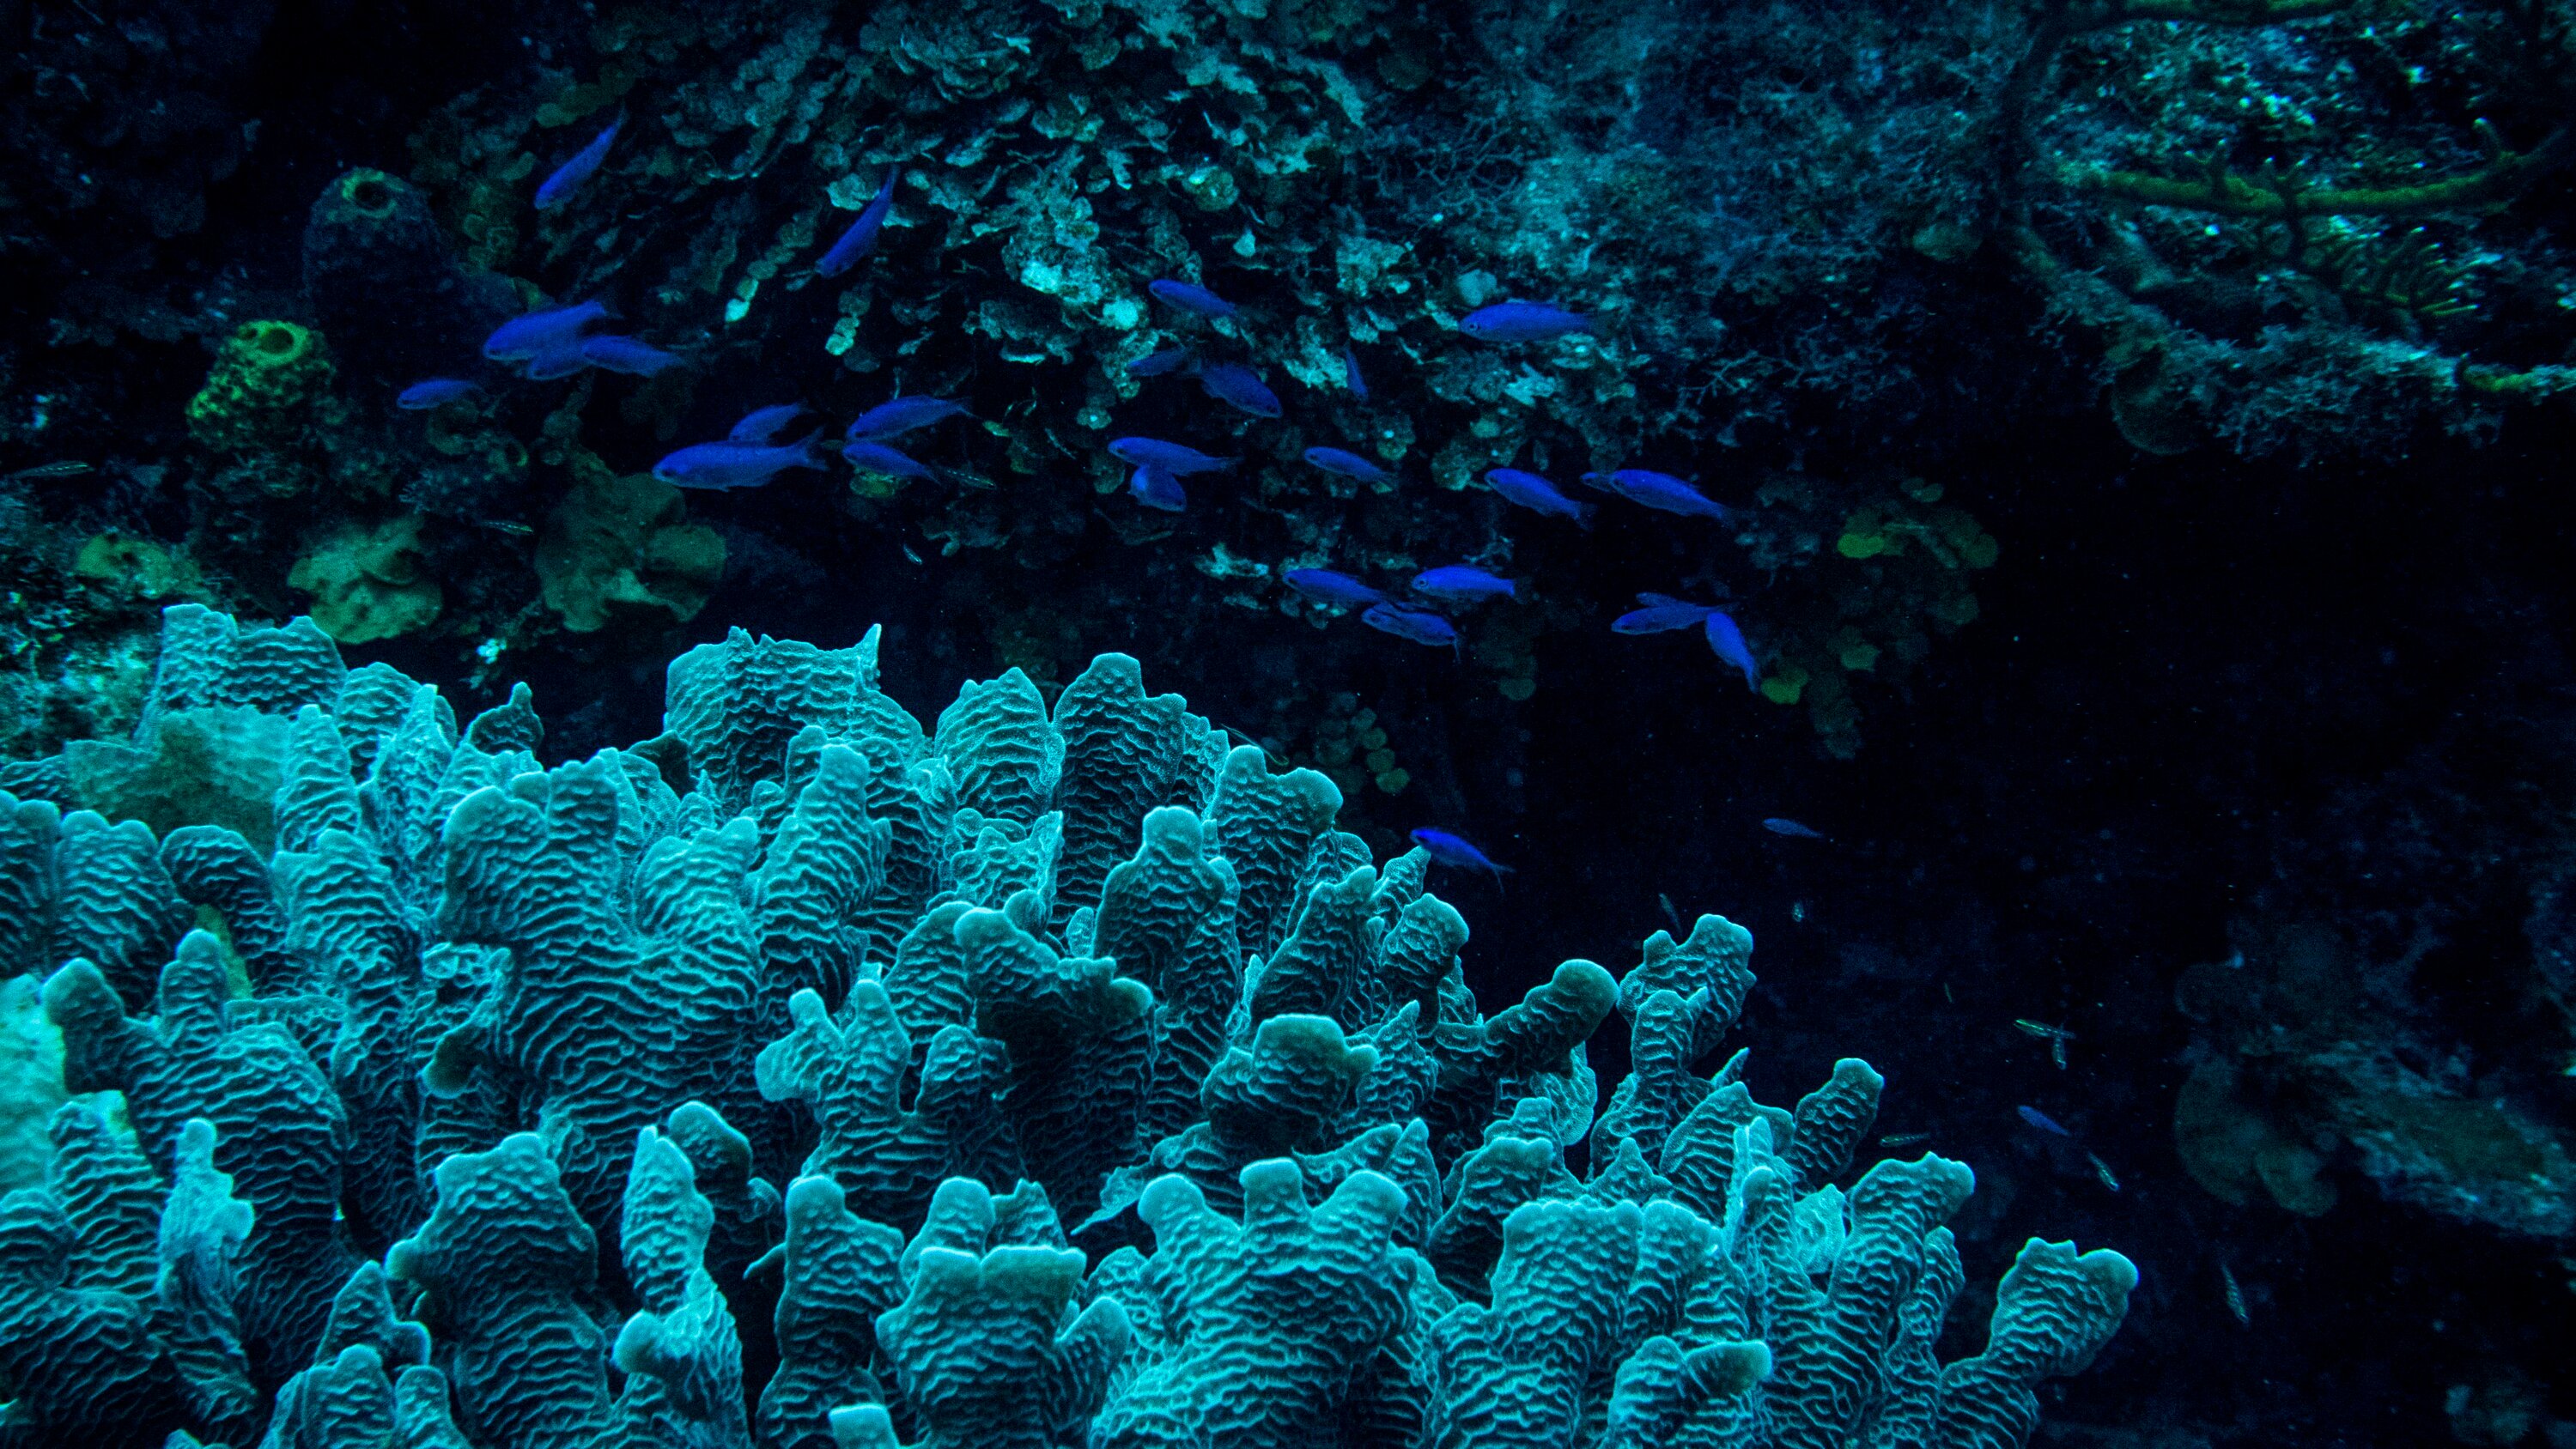 Beautiful Coral Reefs